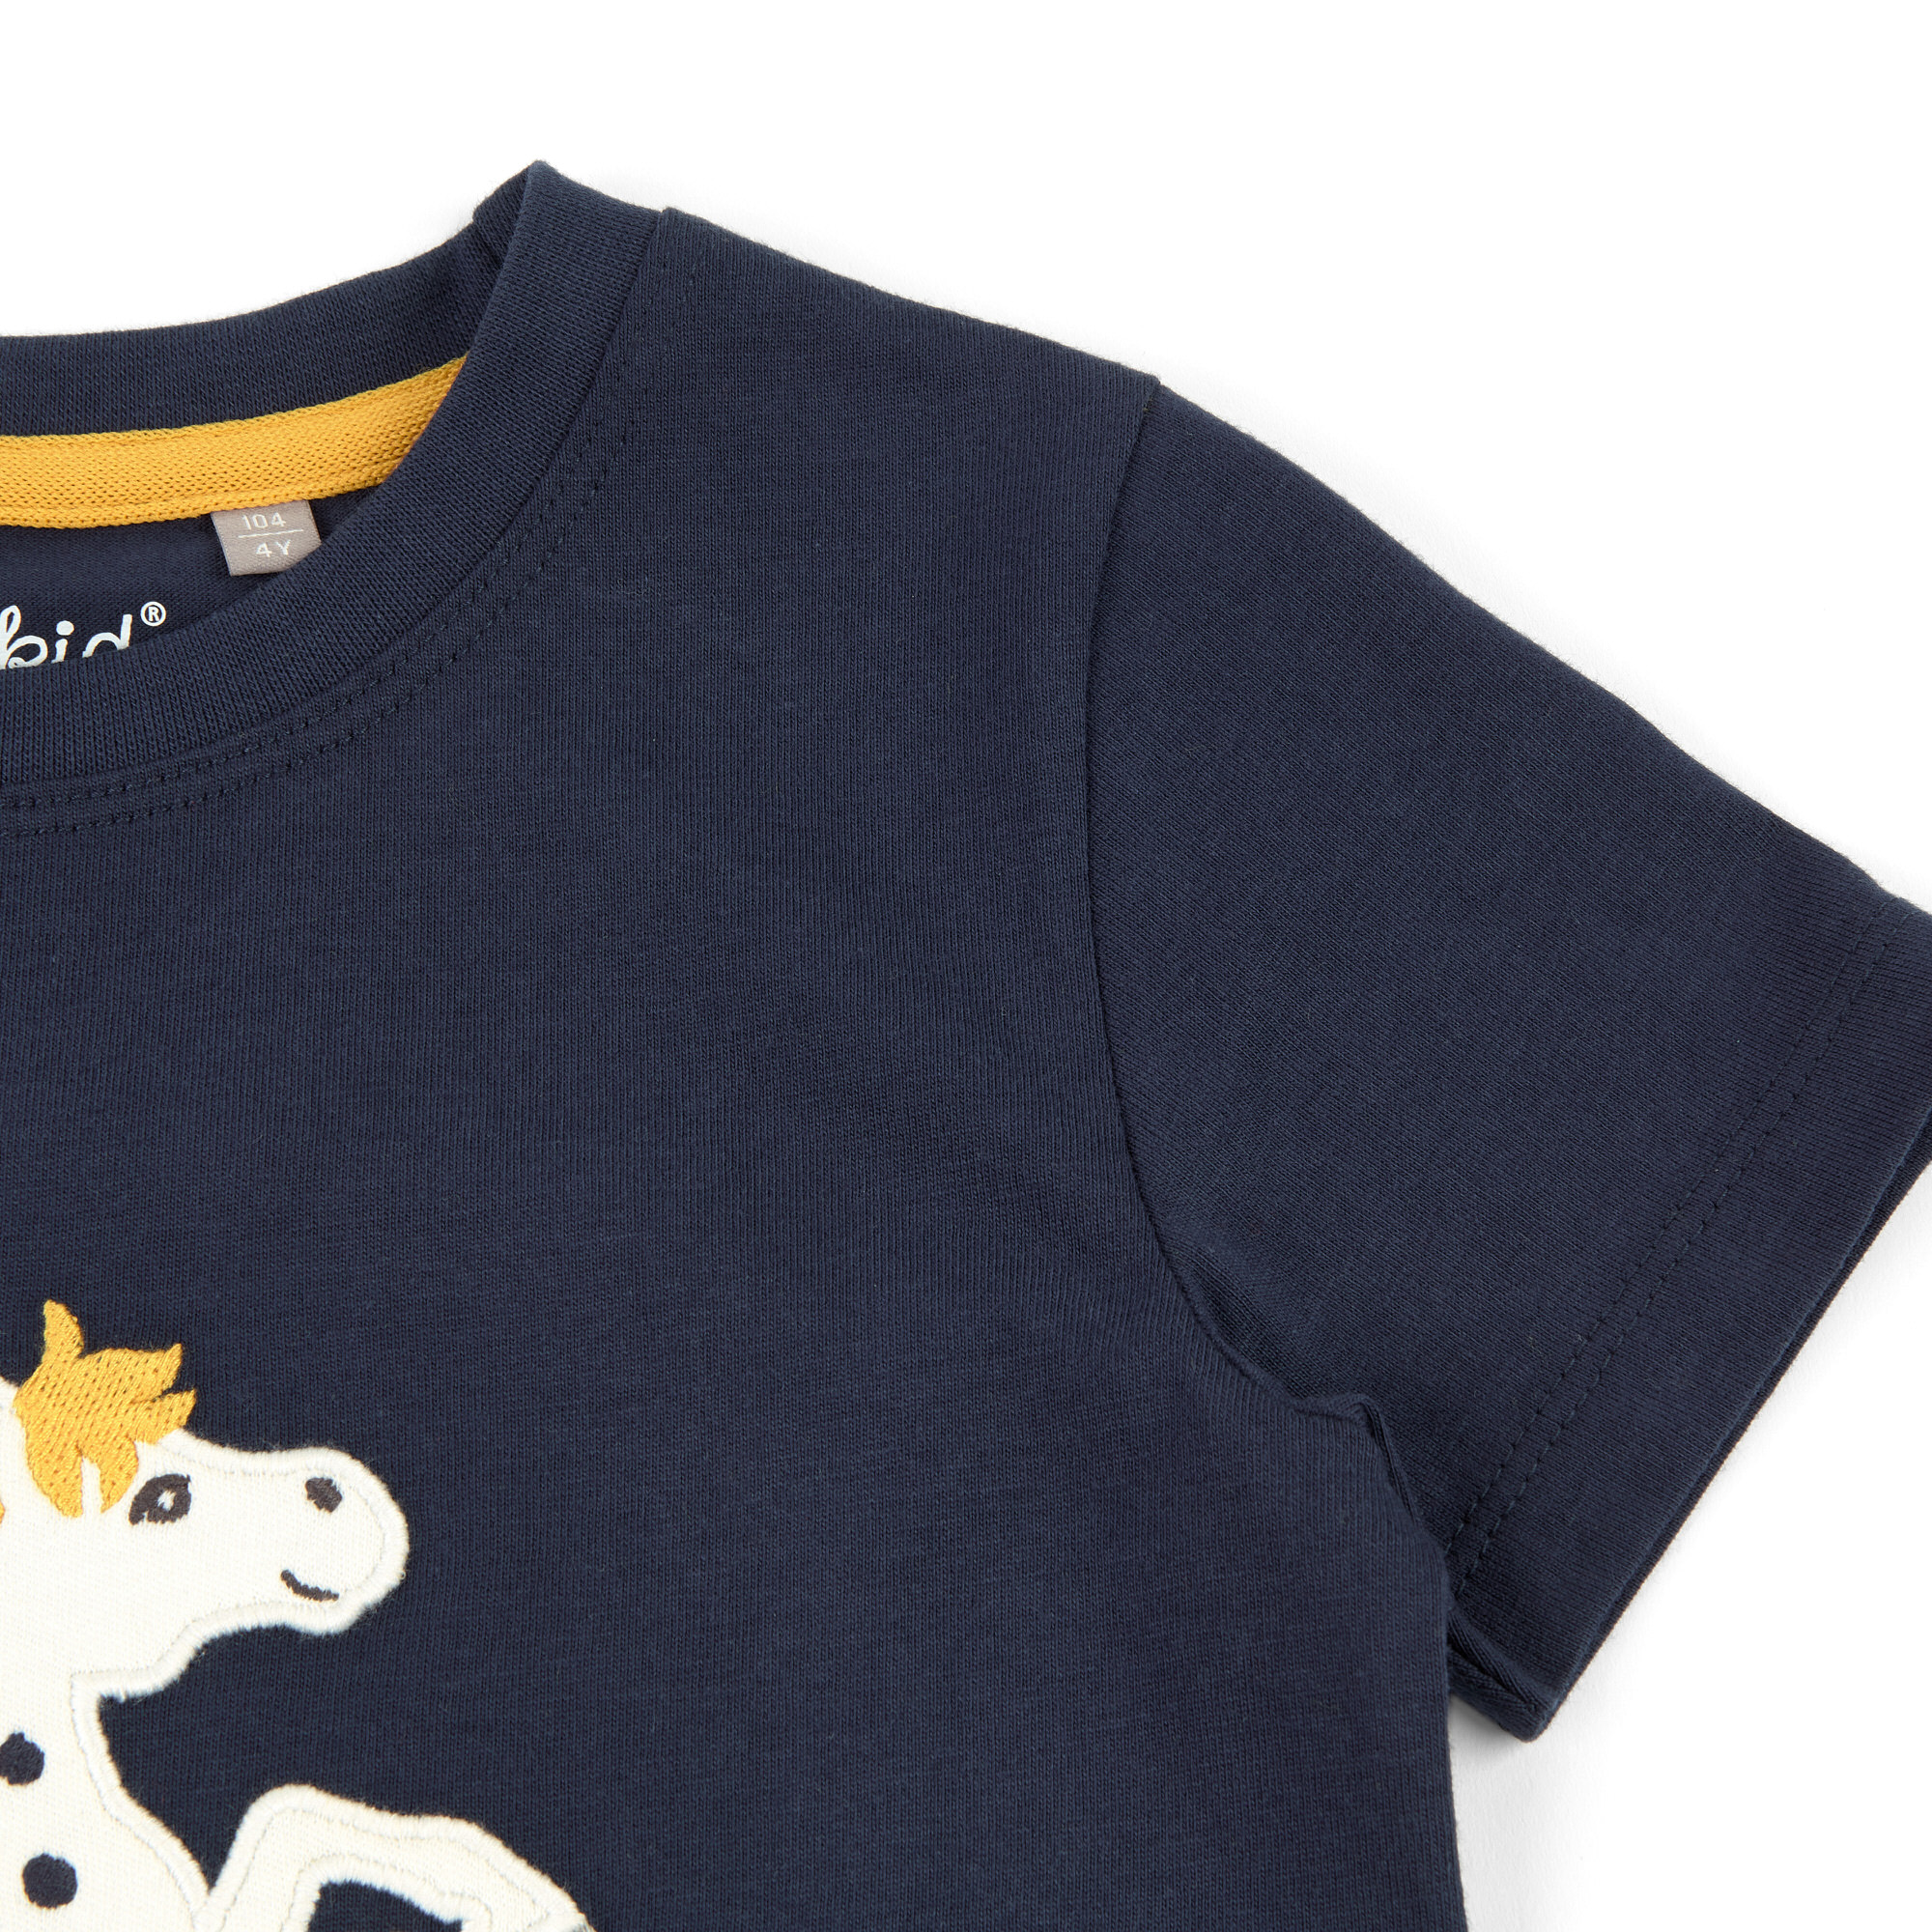 Children's T-shirt Dots Pony, dark blue